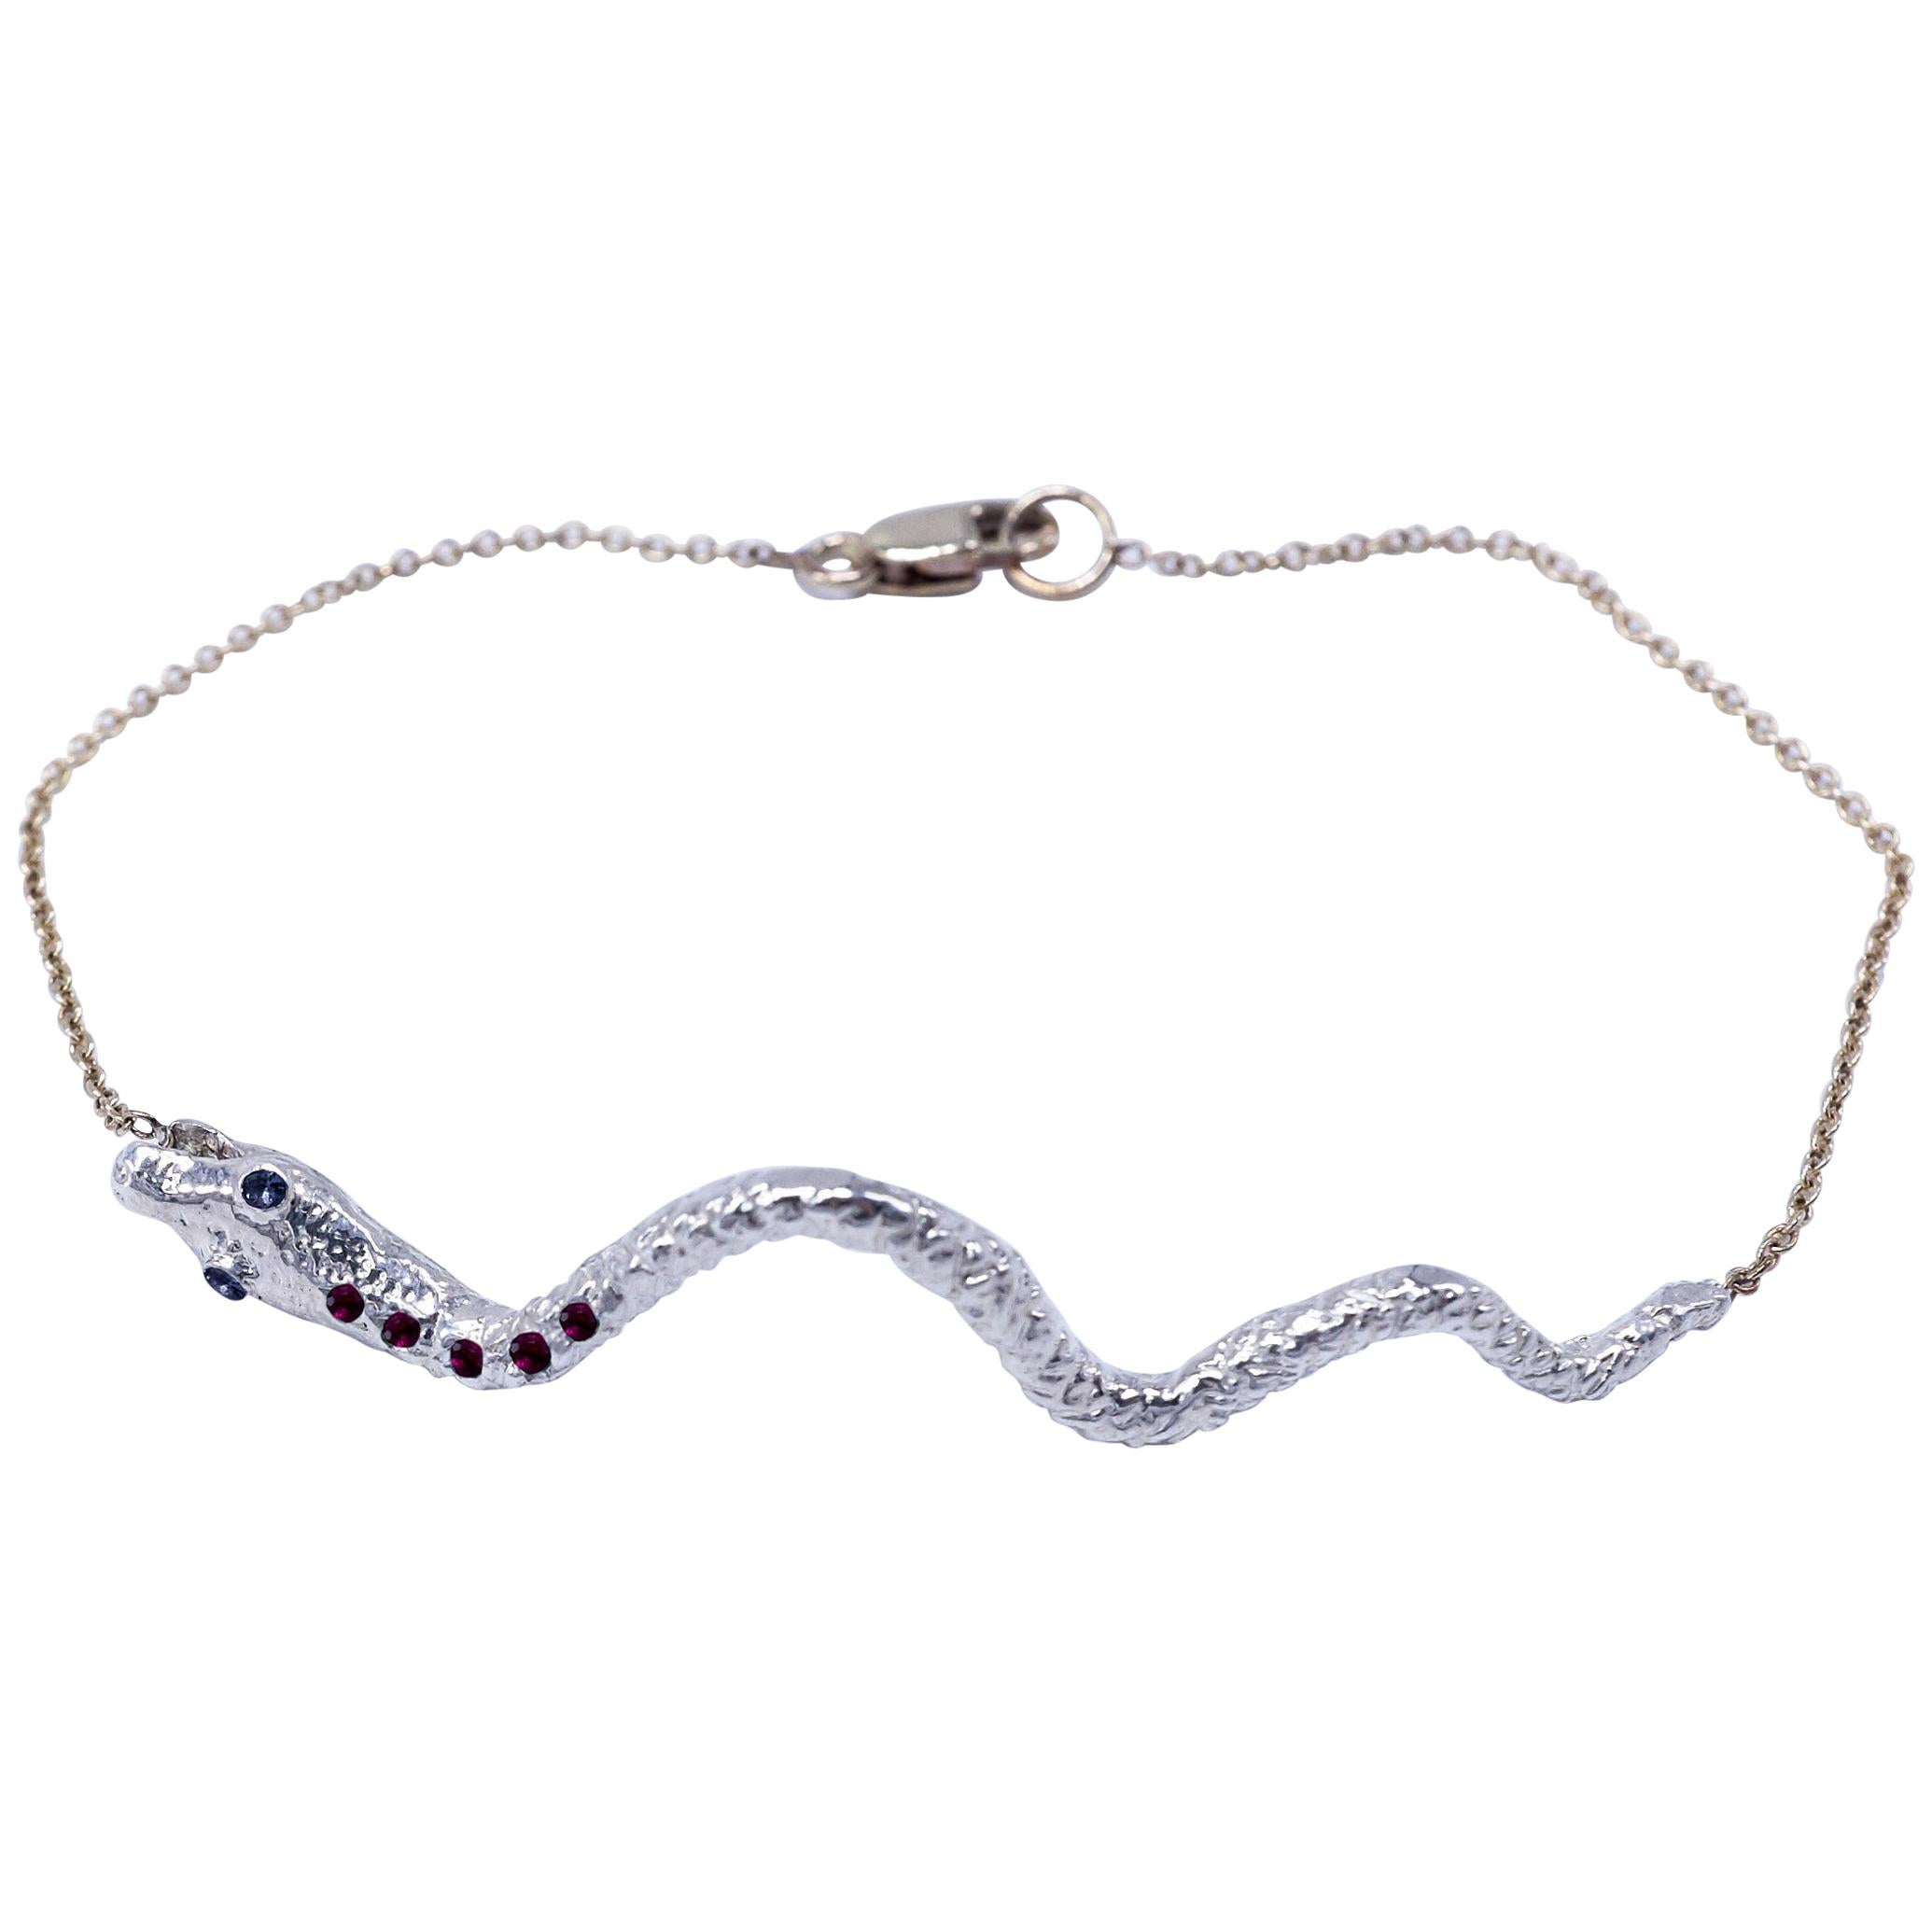 Snake Bracelet Chain Link Ruby Tanzanite Sterling Silver J Dauphin
Gold filled chain

J DAUPHIN Bracelet 